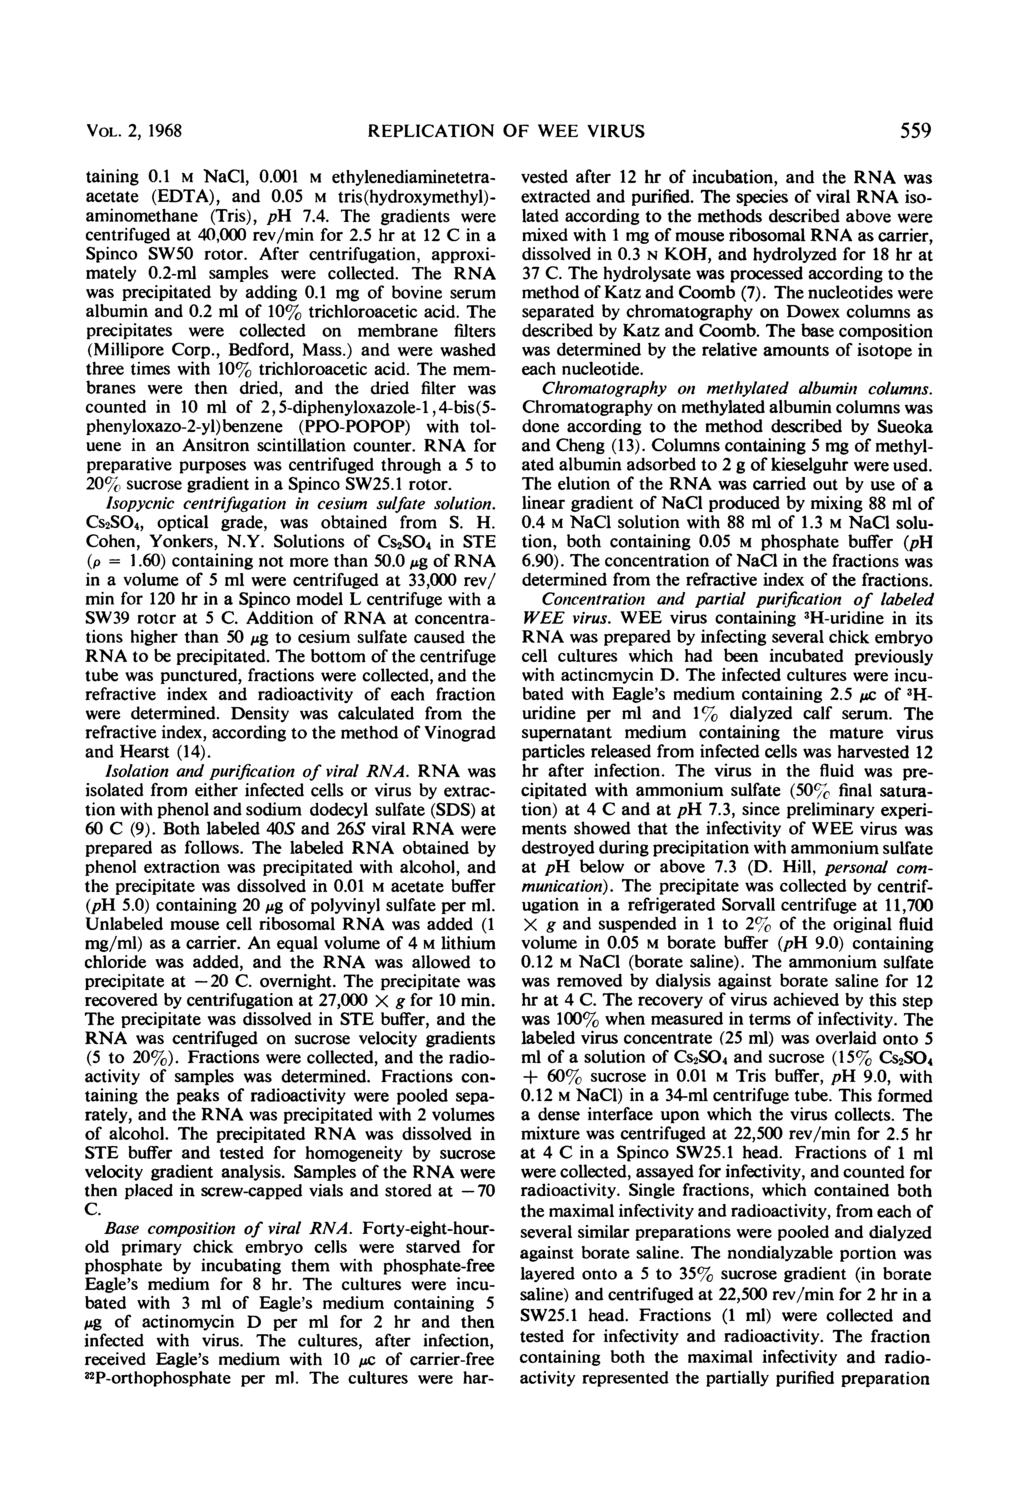 VOL. 2, 1968 REPLICATION OF WEE VIRUS 559 taining.1 M NaCI,.1 M ethylenediaminetetraacetate (EDTA), and.5 M tris(hydroxymethyl)- aminomethane (Tris), ph 7.4.